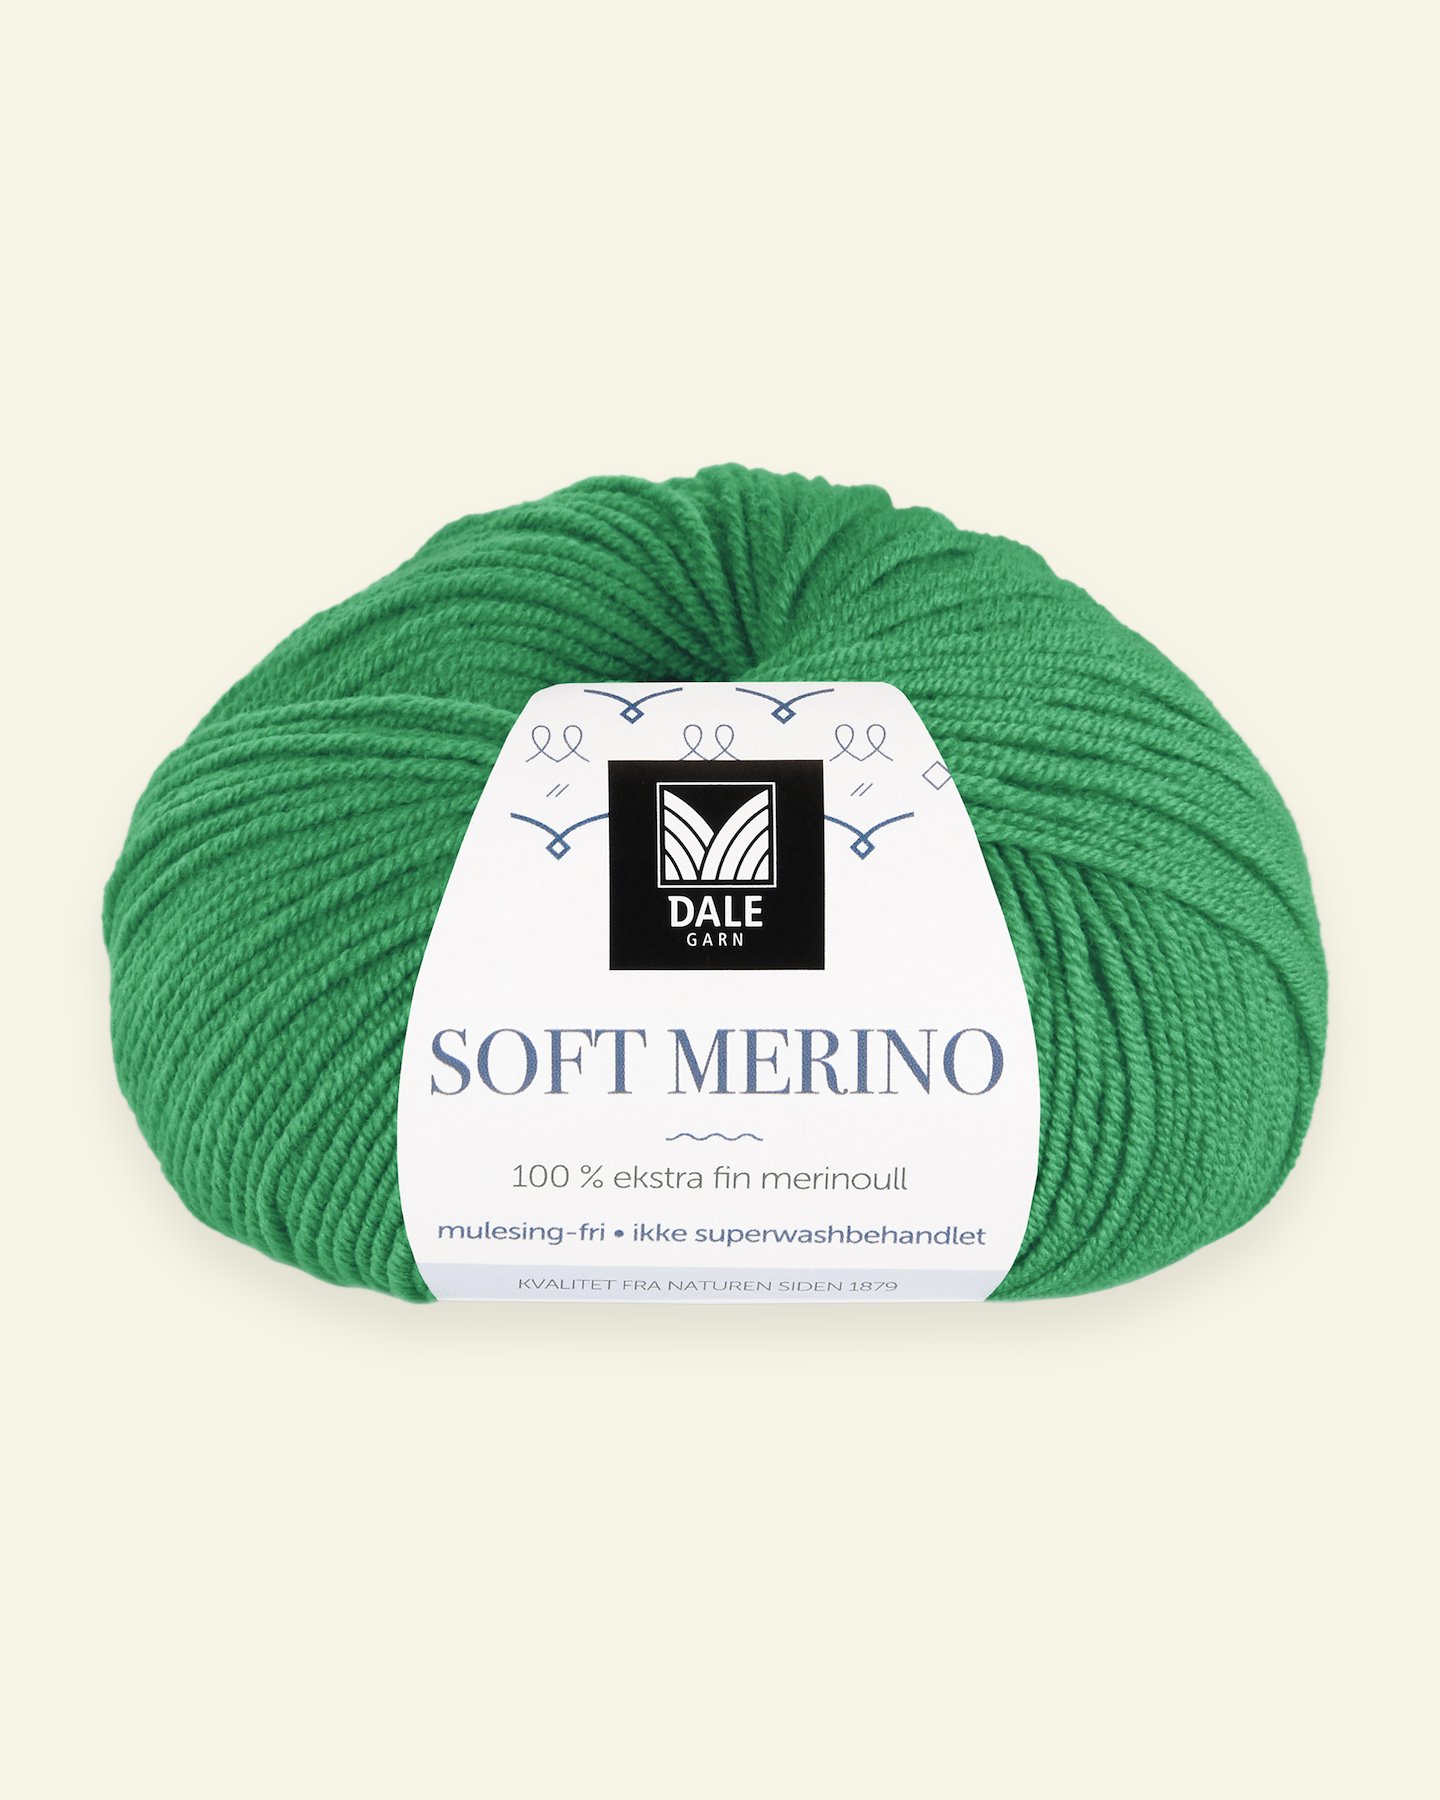 Dale Garn, 100% extra fine merino wool yarn, "Soft Merino", green (3030) 90000351_pack